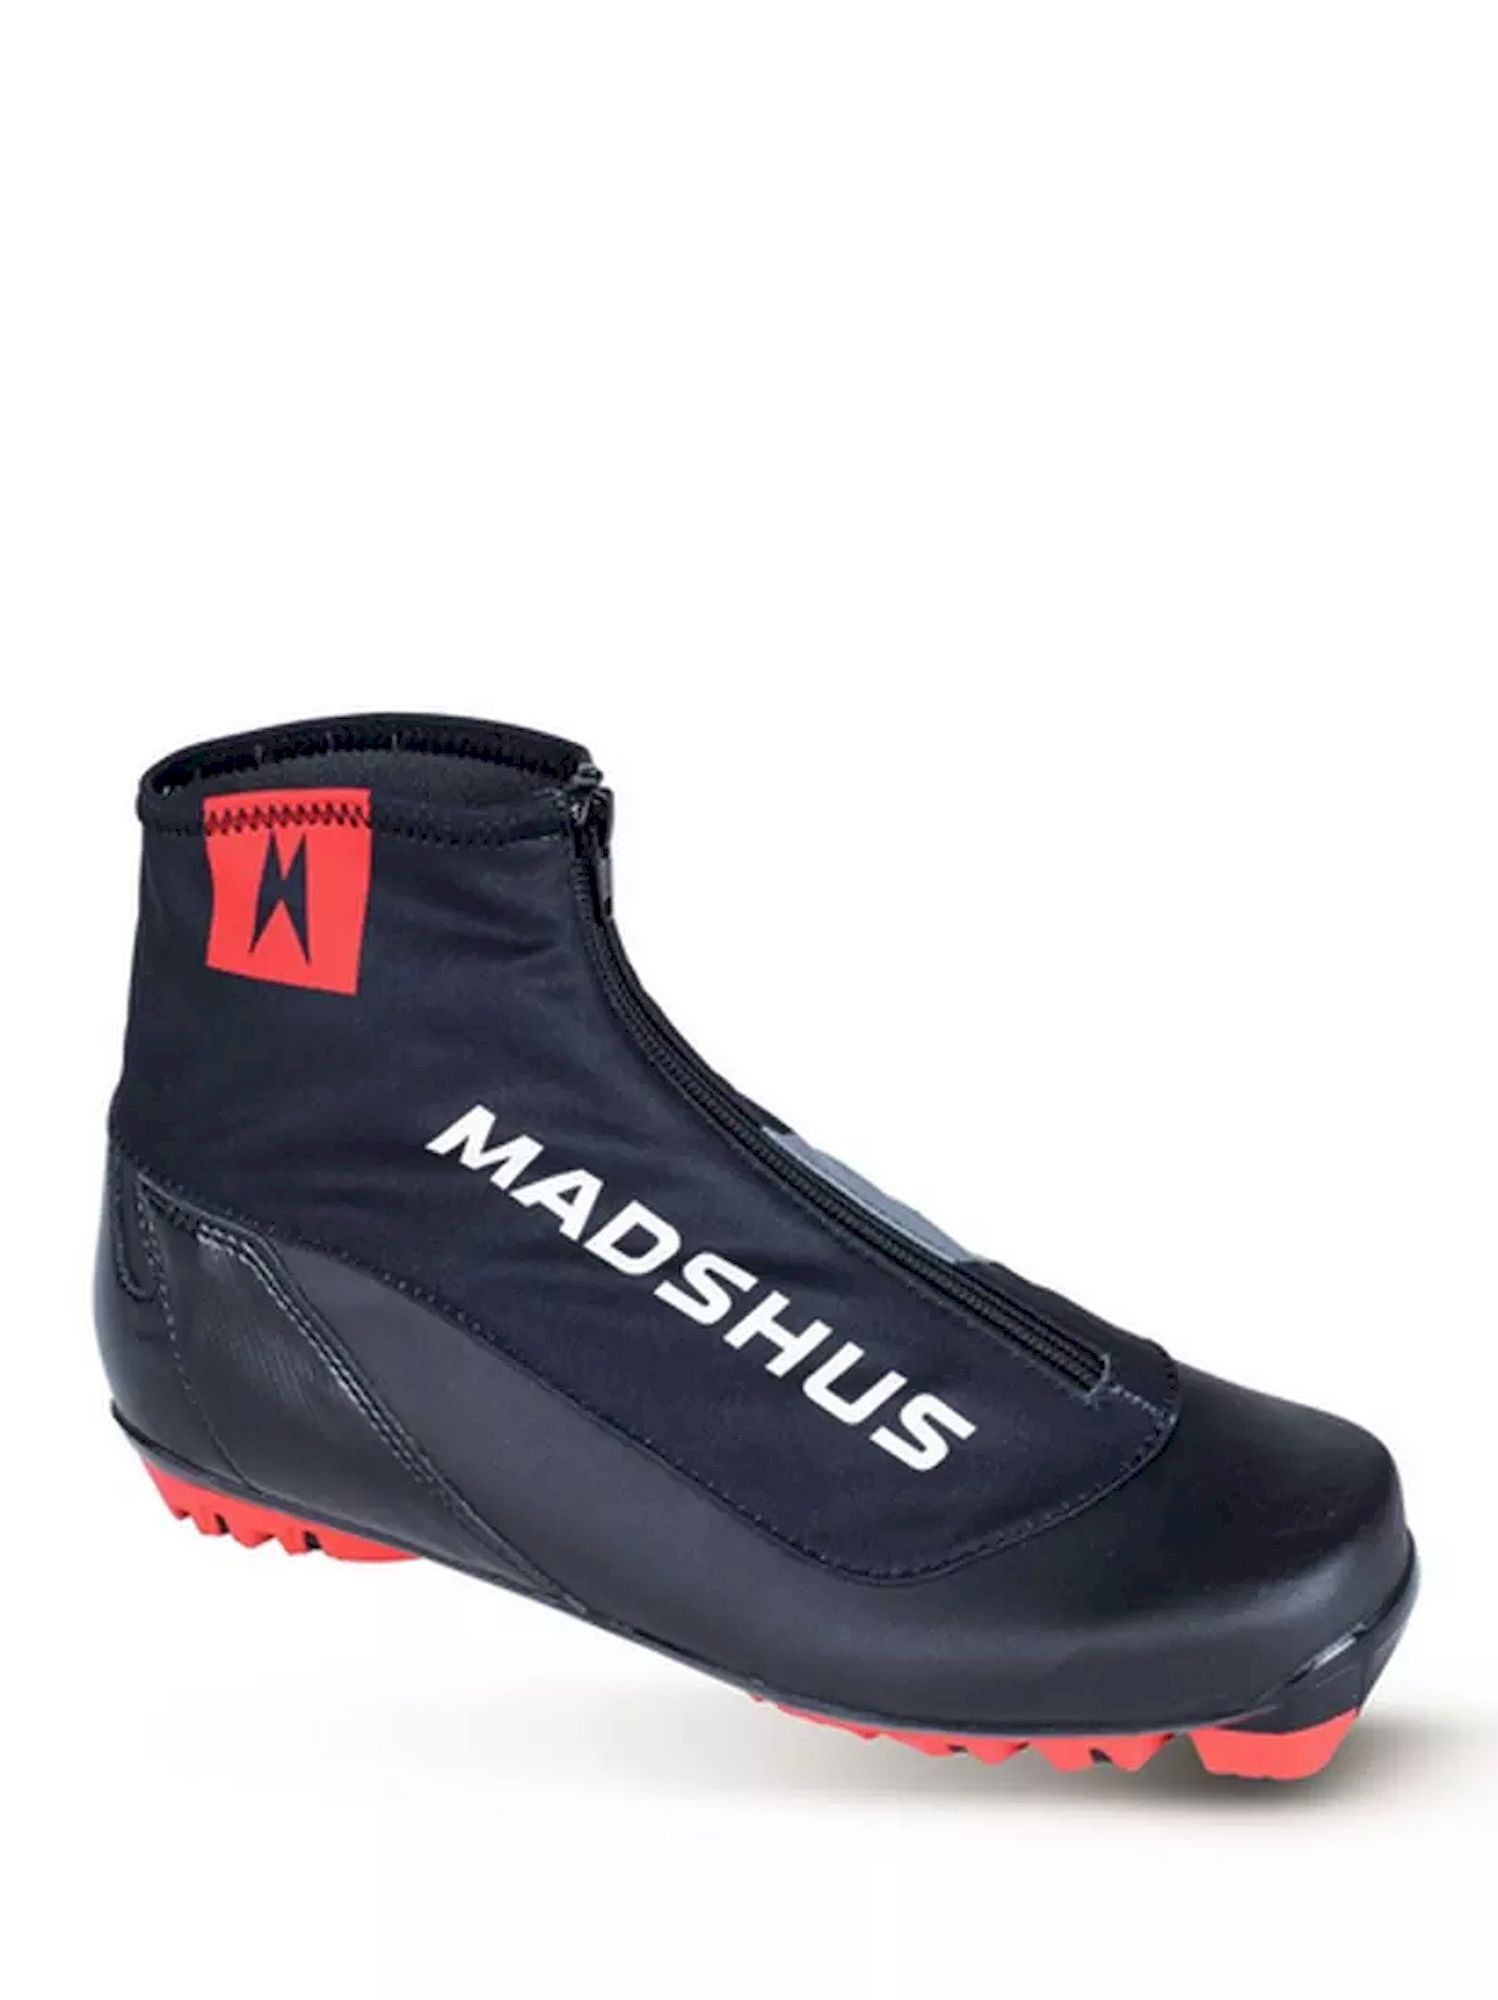 Madshus Endurace Classic - Scarponi sci di fondo | Hardloop